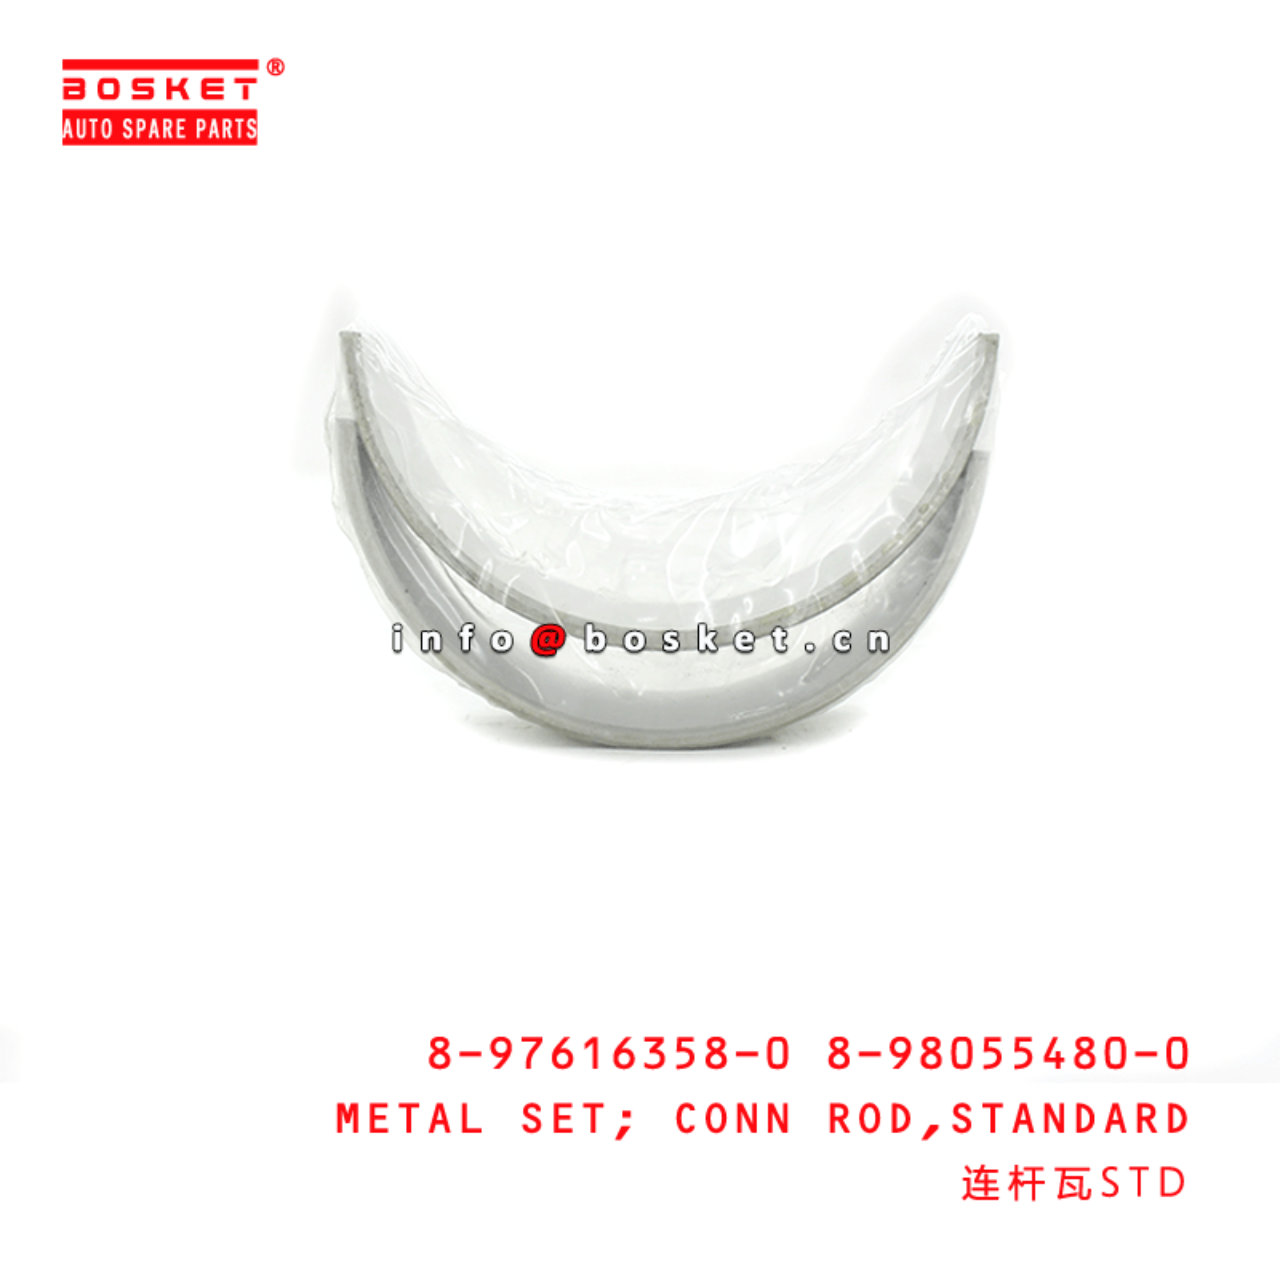 8-97616358-0 8-98055480-0 Standard Connecting Rod Metal Set 8976163580 8980554800 Suitable for ISUZU